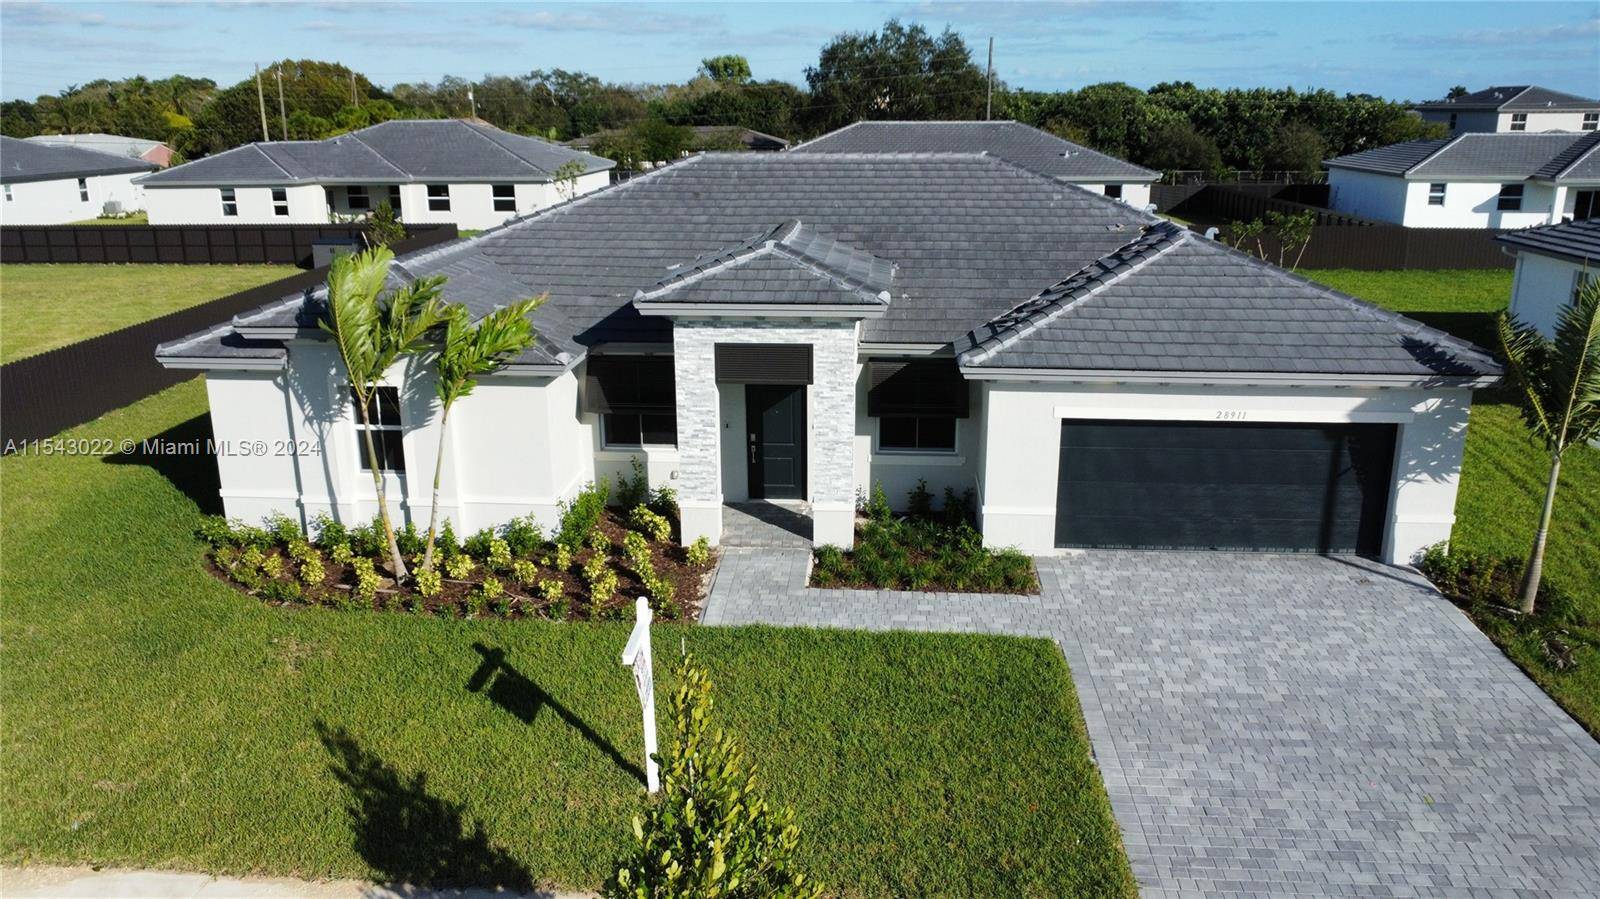 Sedona Estates, a beautiful community of new single family homes in Miami, FL.